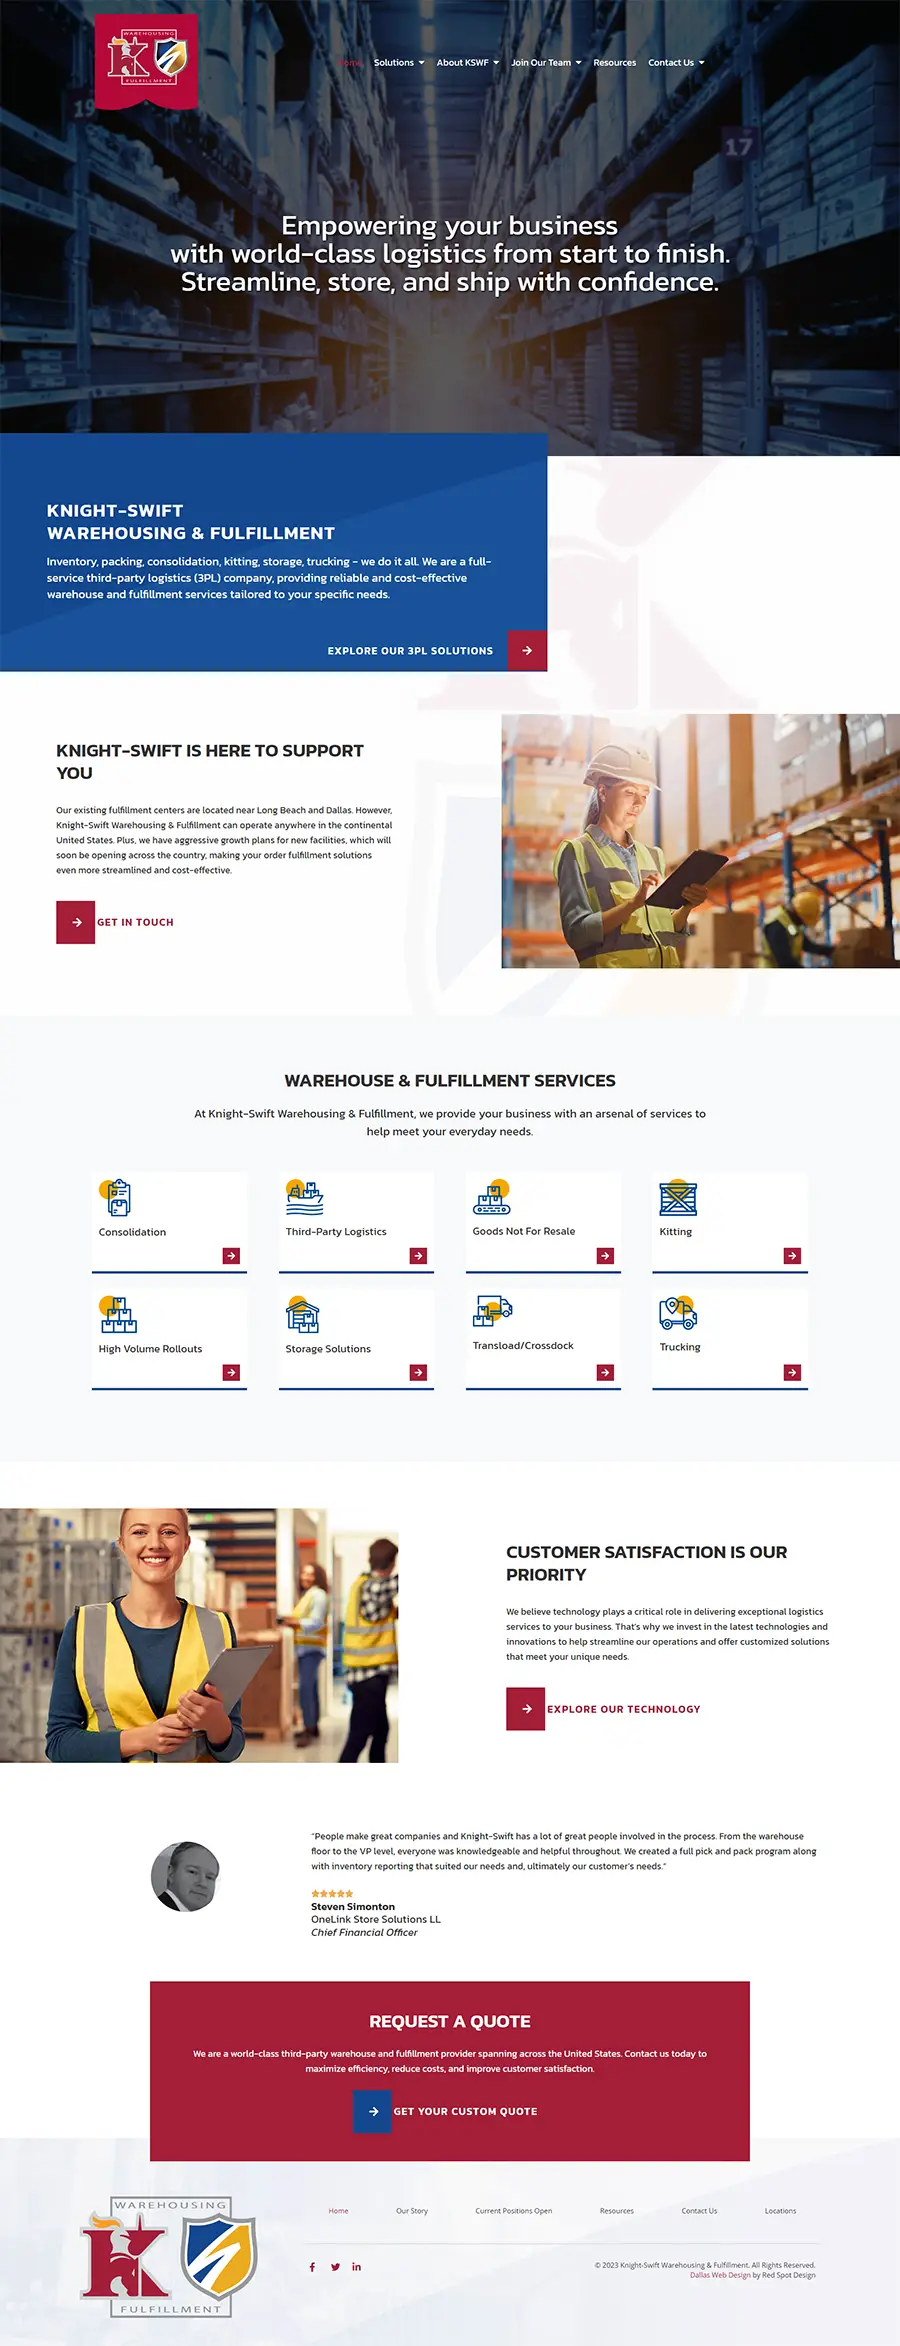 website designed for knight-swift warehousing